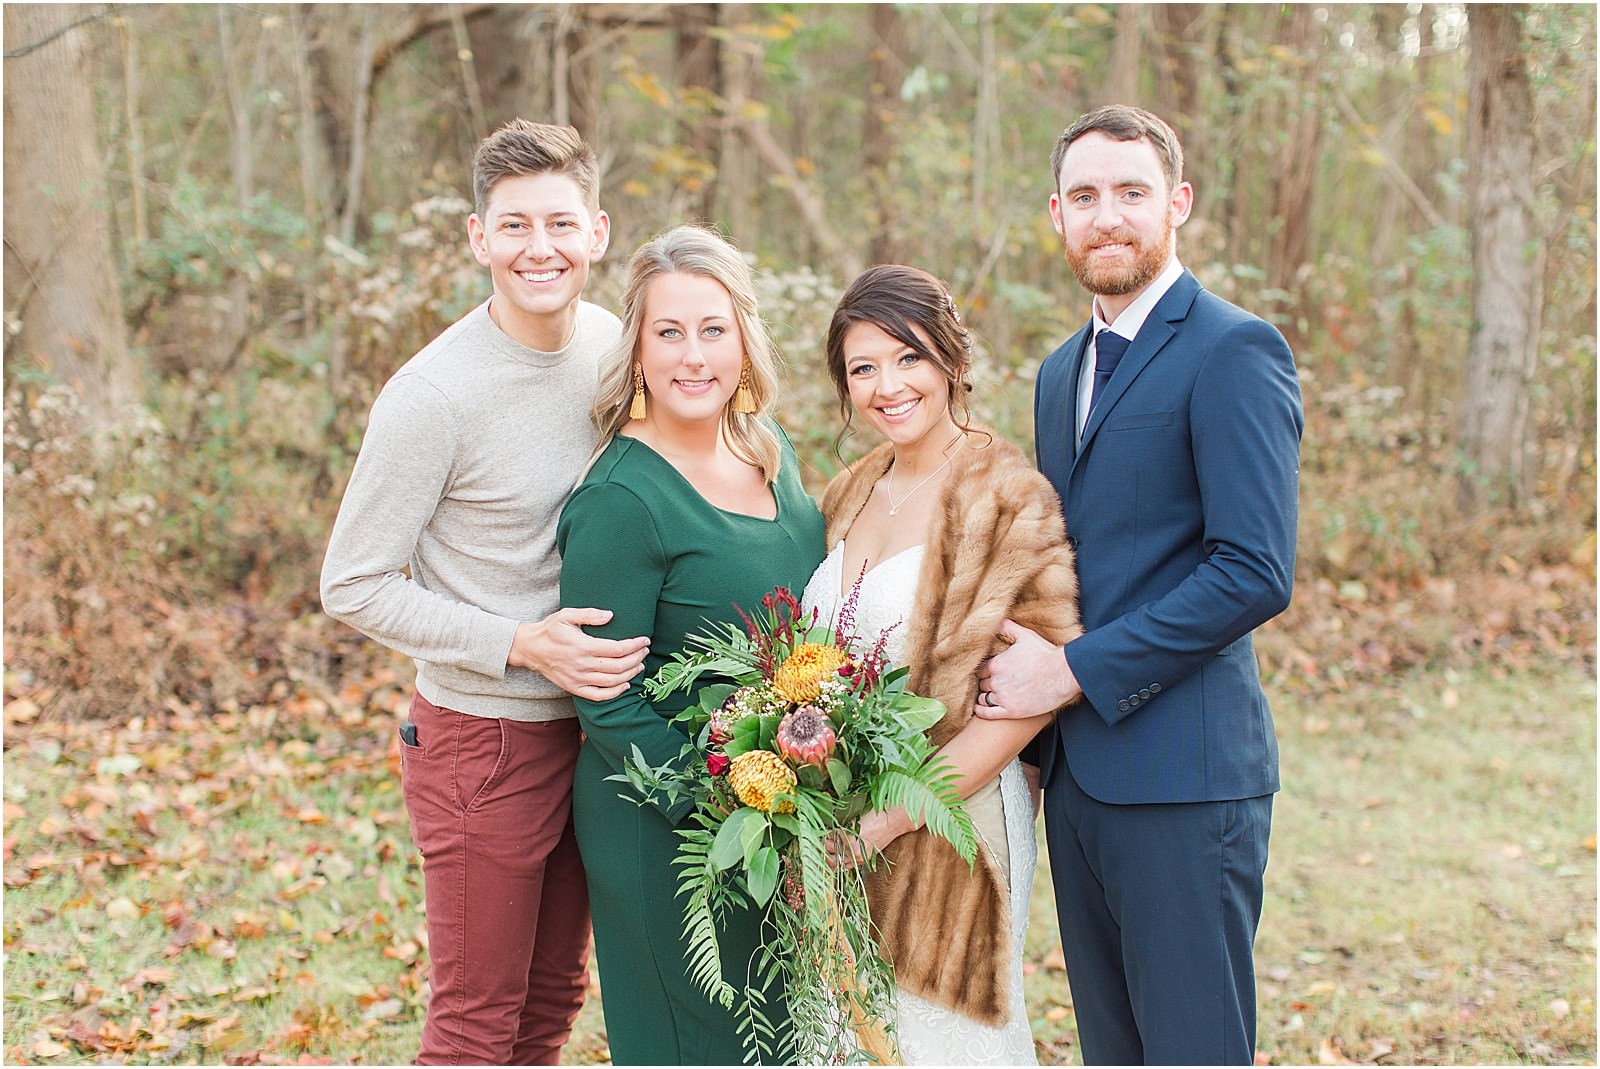 Walker and Alyssa's intimate fall wedding in Southern Indiana. | Wedding Photography | The Corner House Wedding | Southern Indiana Wedding | #fallwedding #intimatewedding | 084.jpg